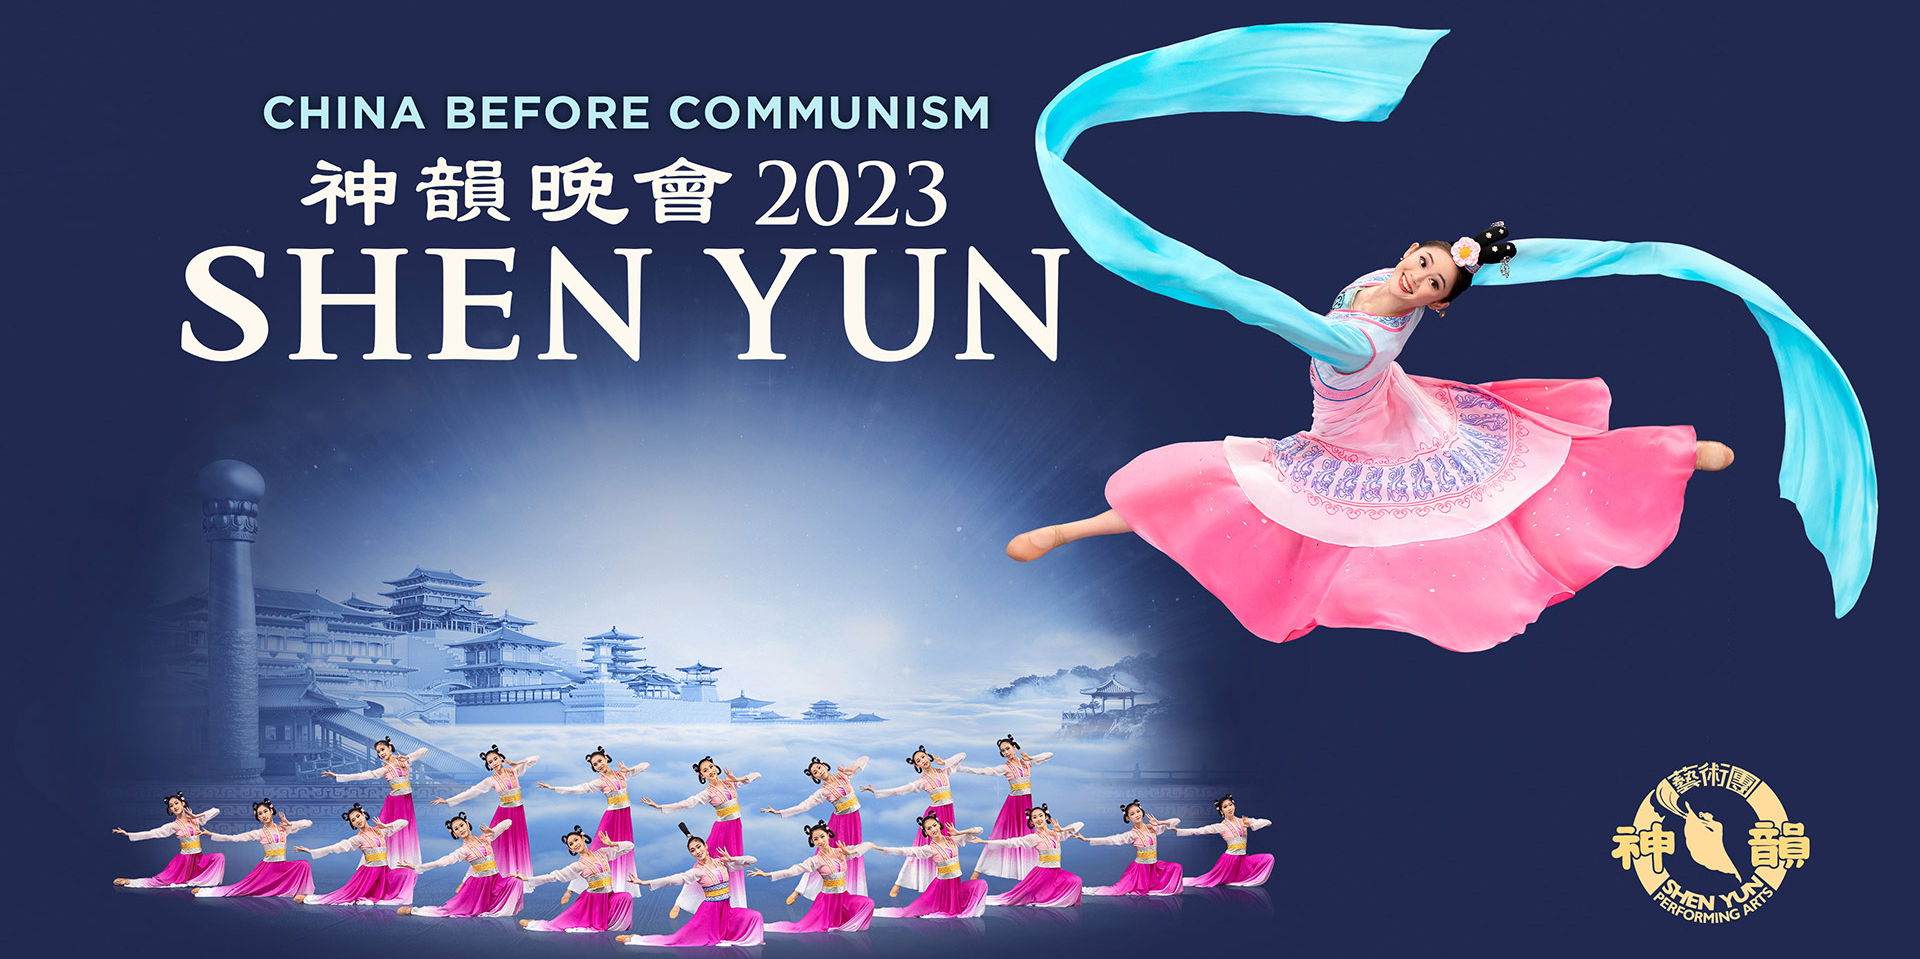 Shen Yun Performing Arts promotional image